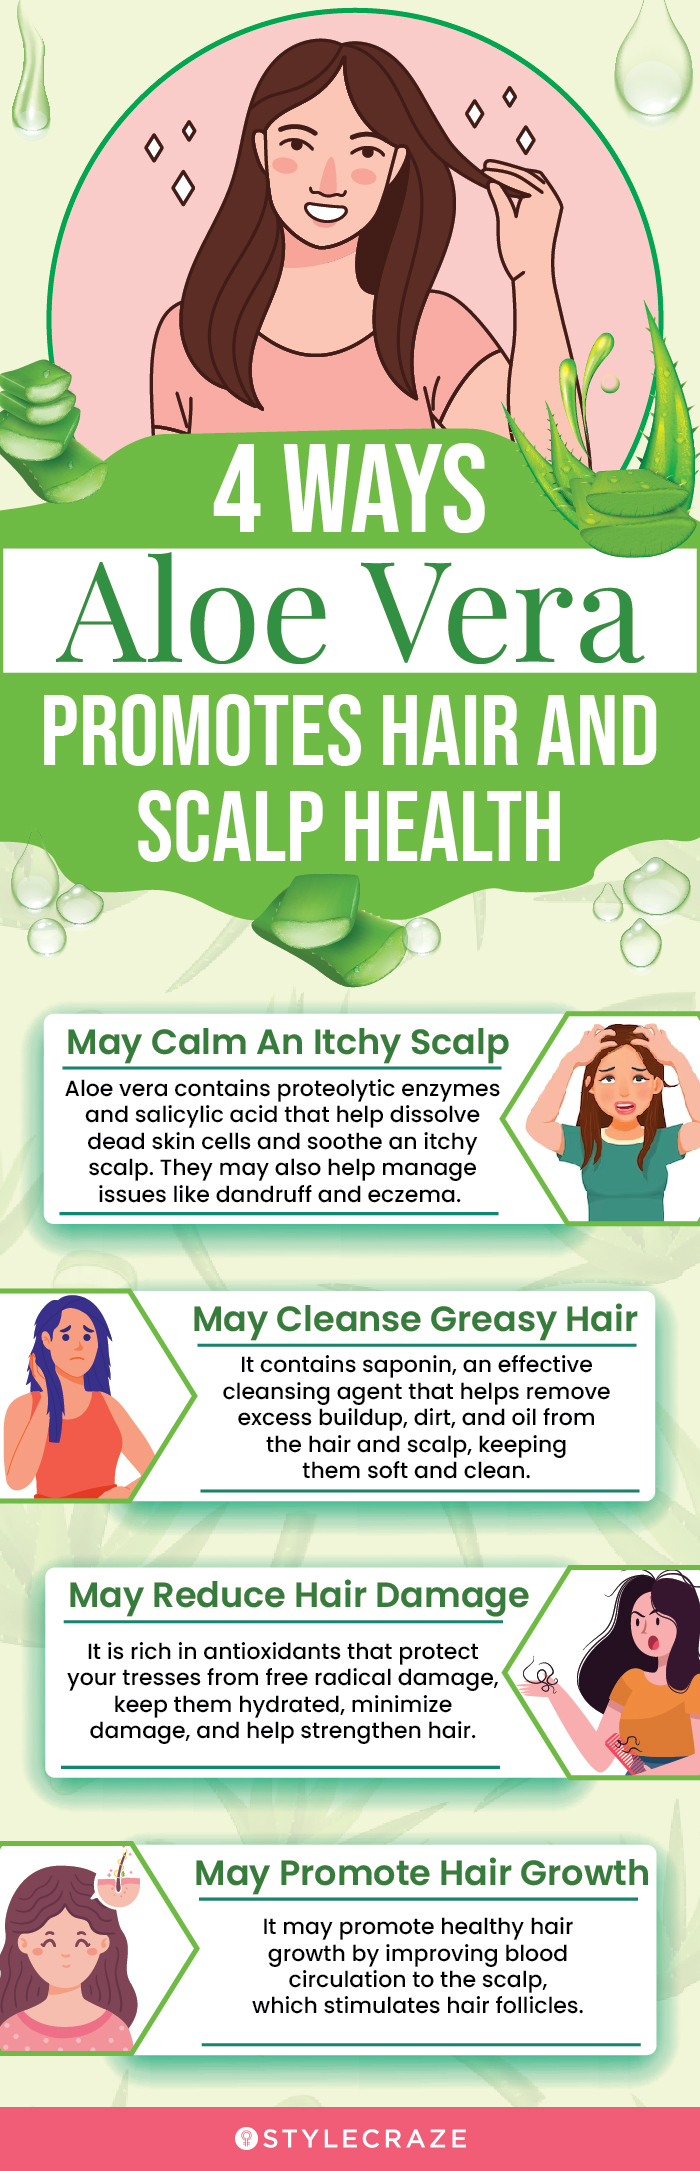 4 ways aloe vera promotes hair and scalp health (infographic)